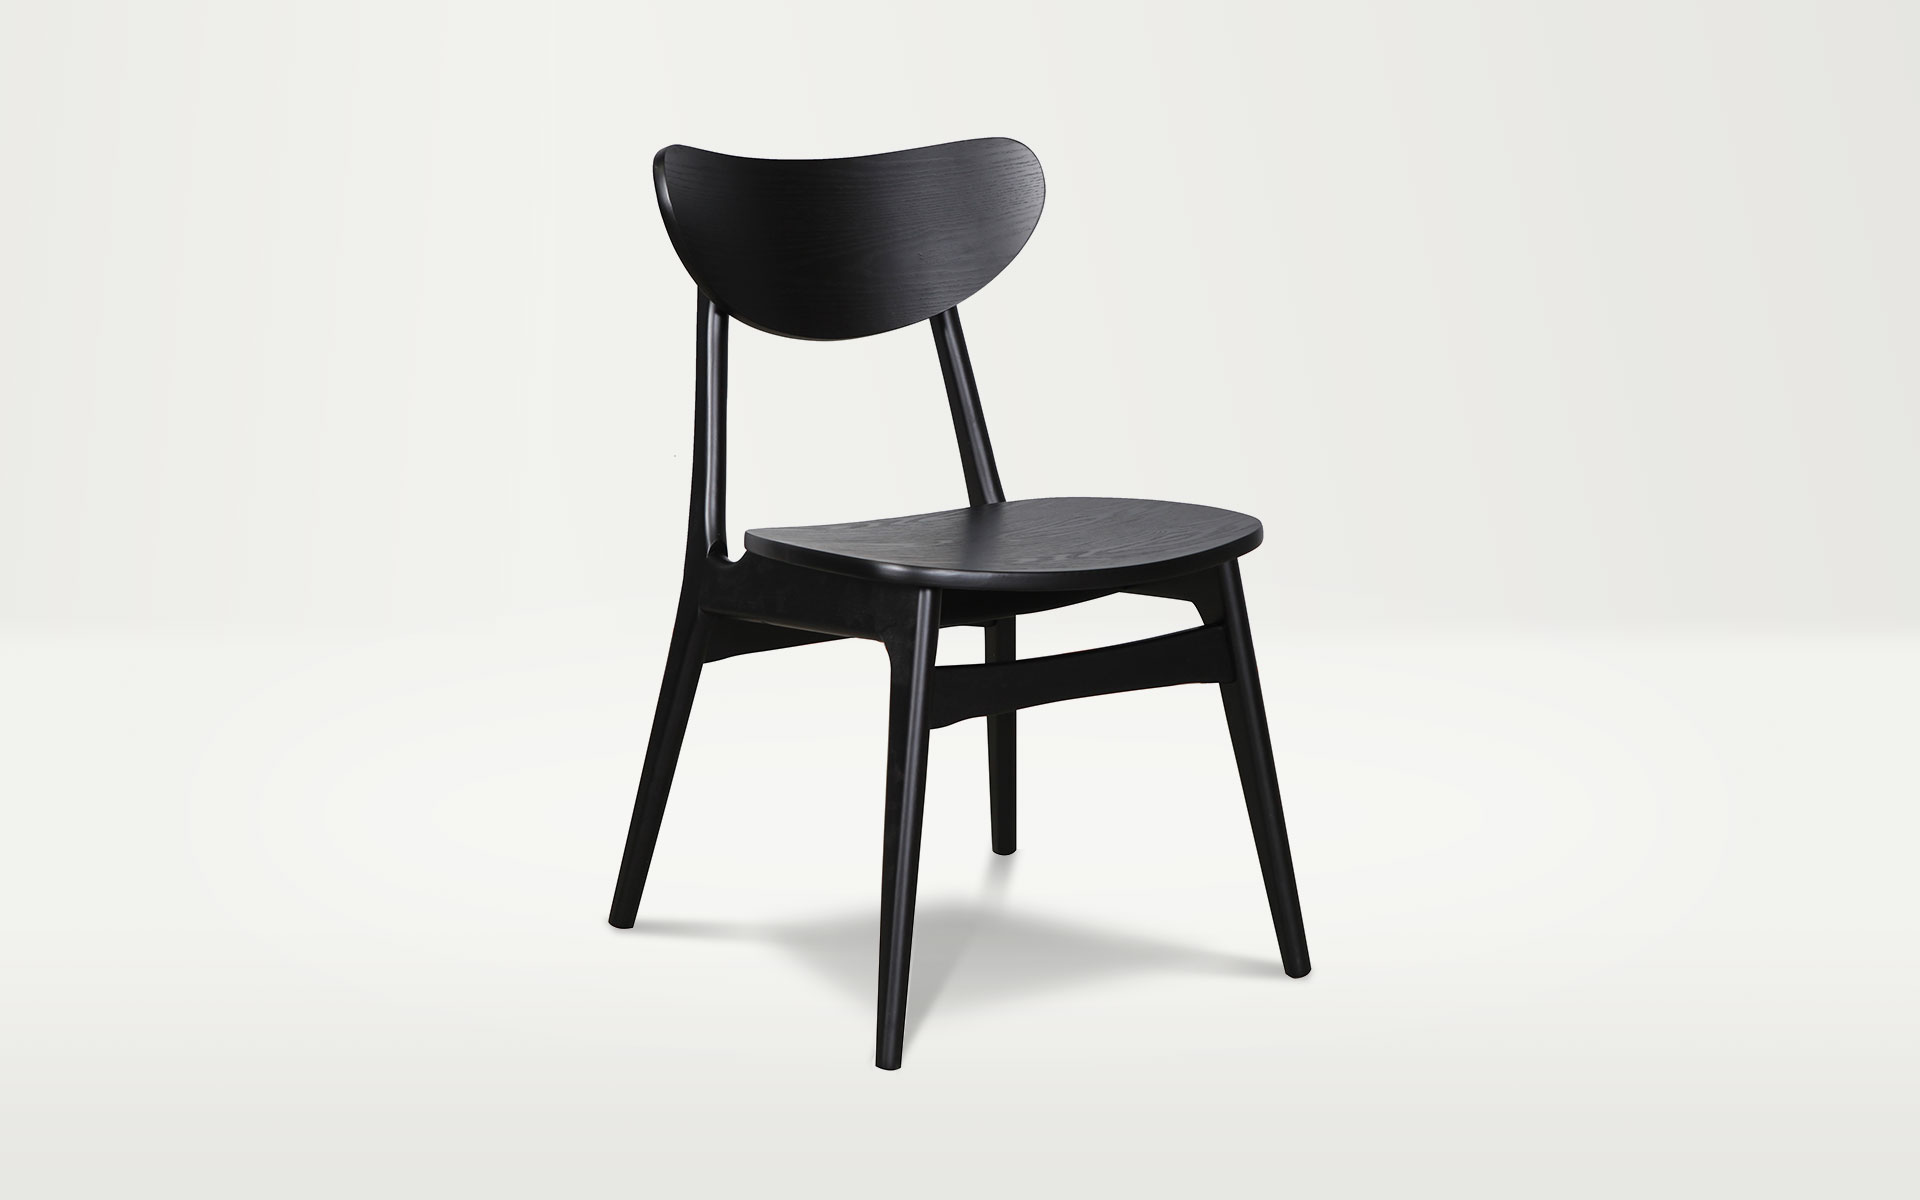 02 Finland Chair Black - Finland Dining Chair - Black/Truffle Frabric